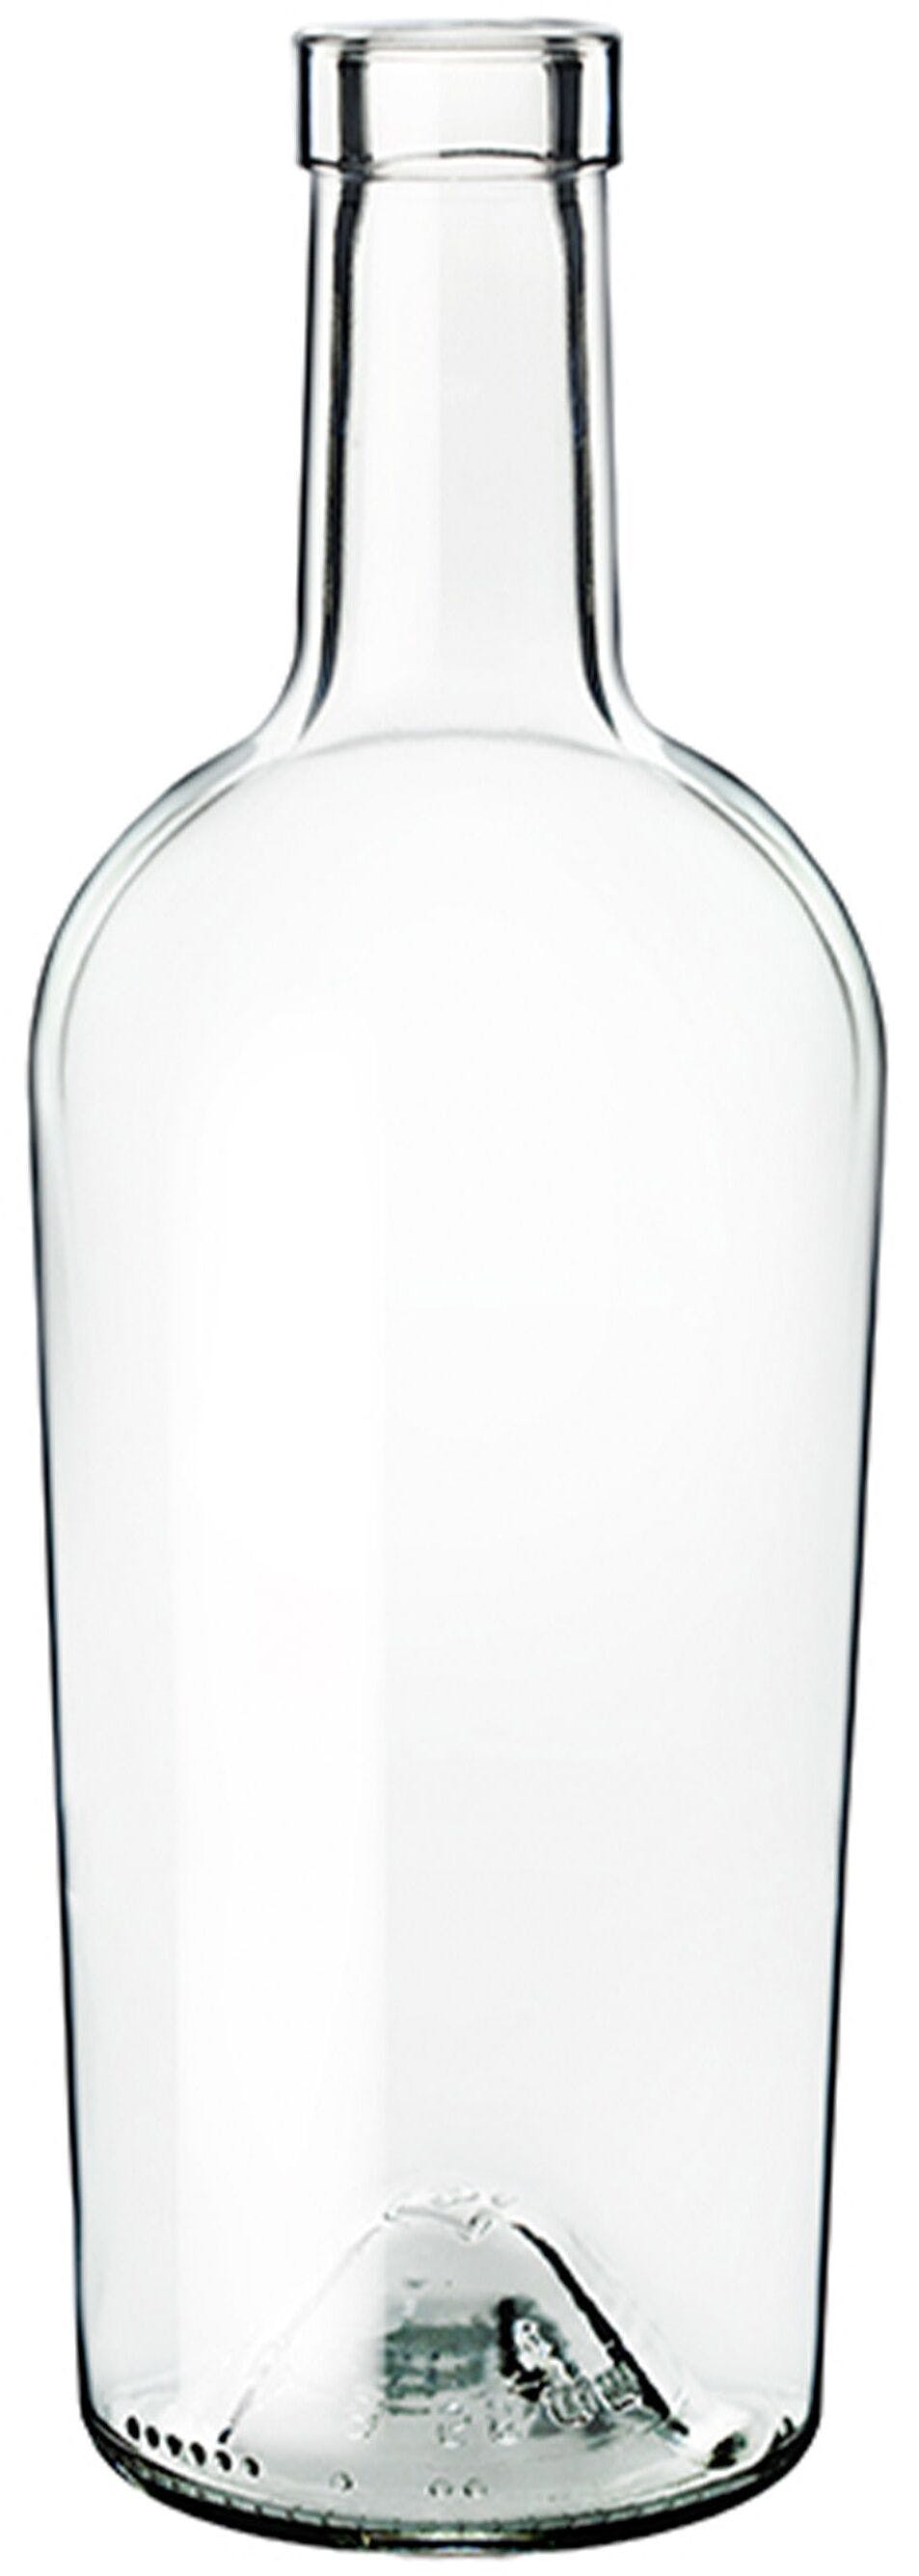 Bottiglia bordolese   REGINE ALLEGE' 500 ml BG-Sughero